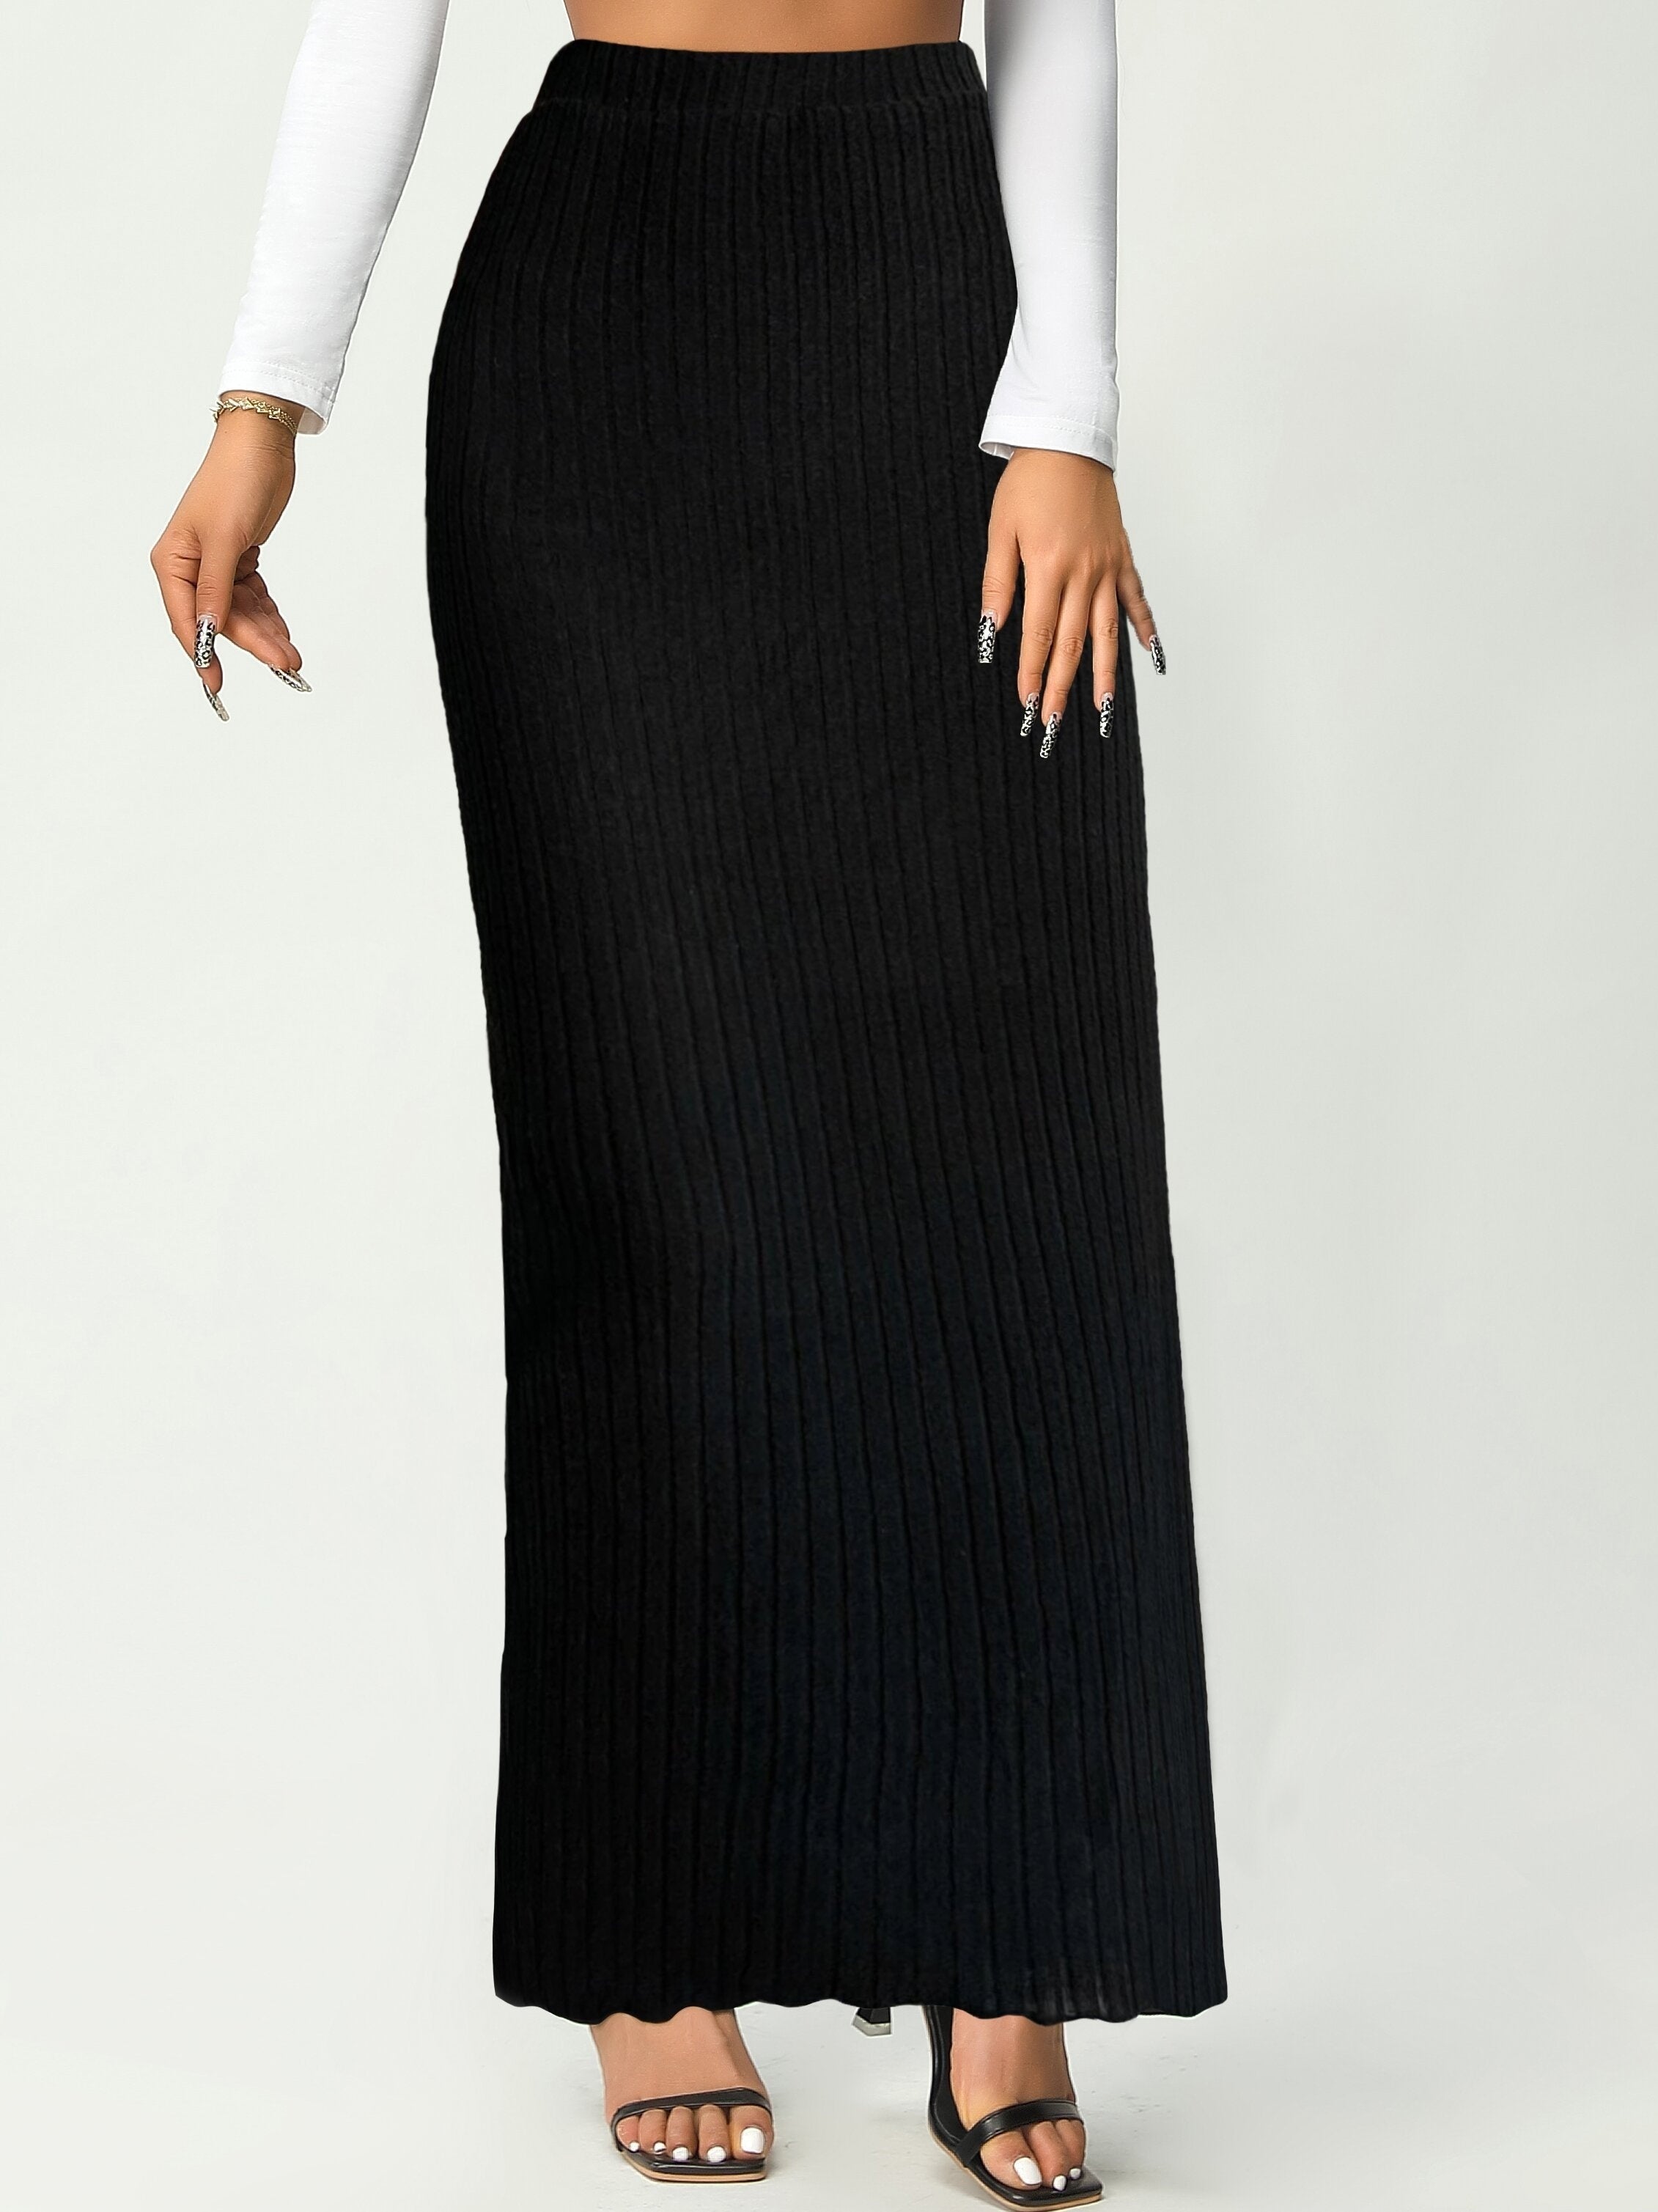 Solid Scallop Trim High Waist Skirt, Elegant Long Length Skirt For Spring & Fall, Women's Clothing